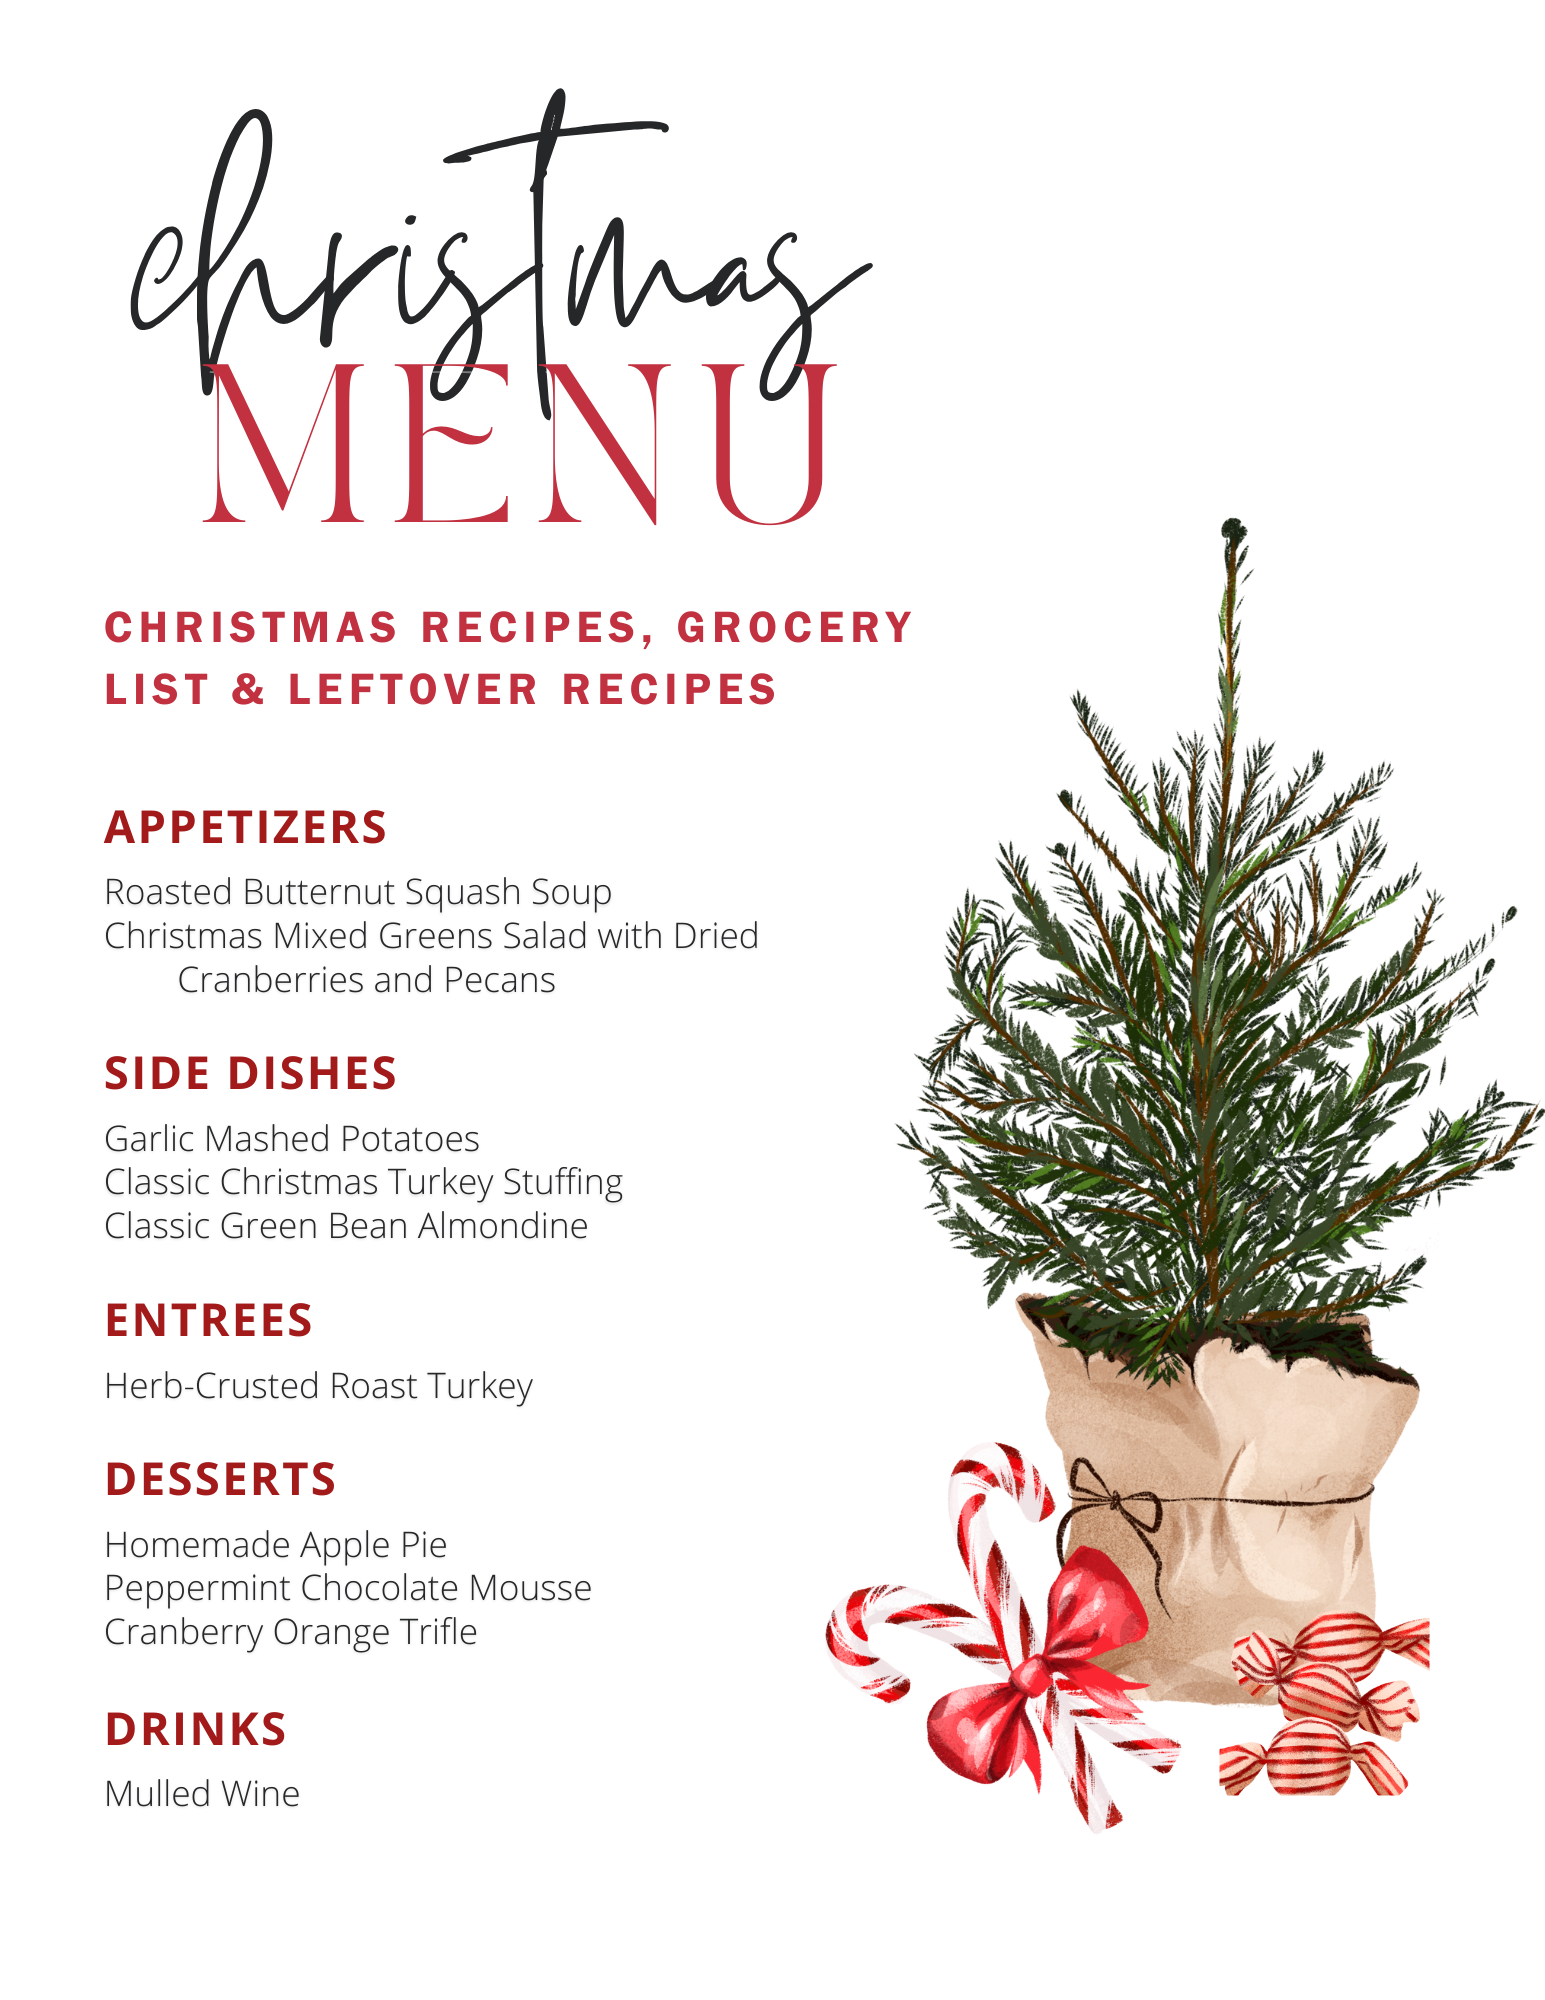 Christmas Menu Recipes and Grocery List